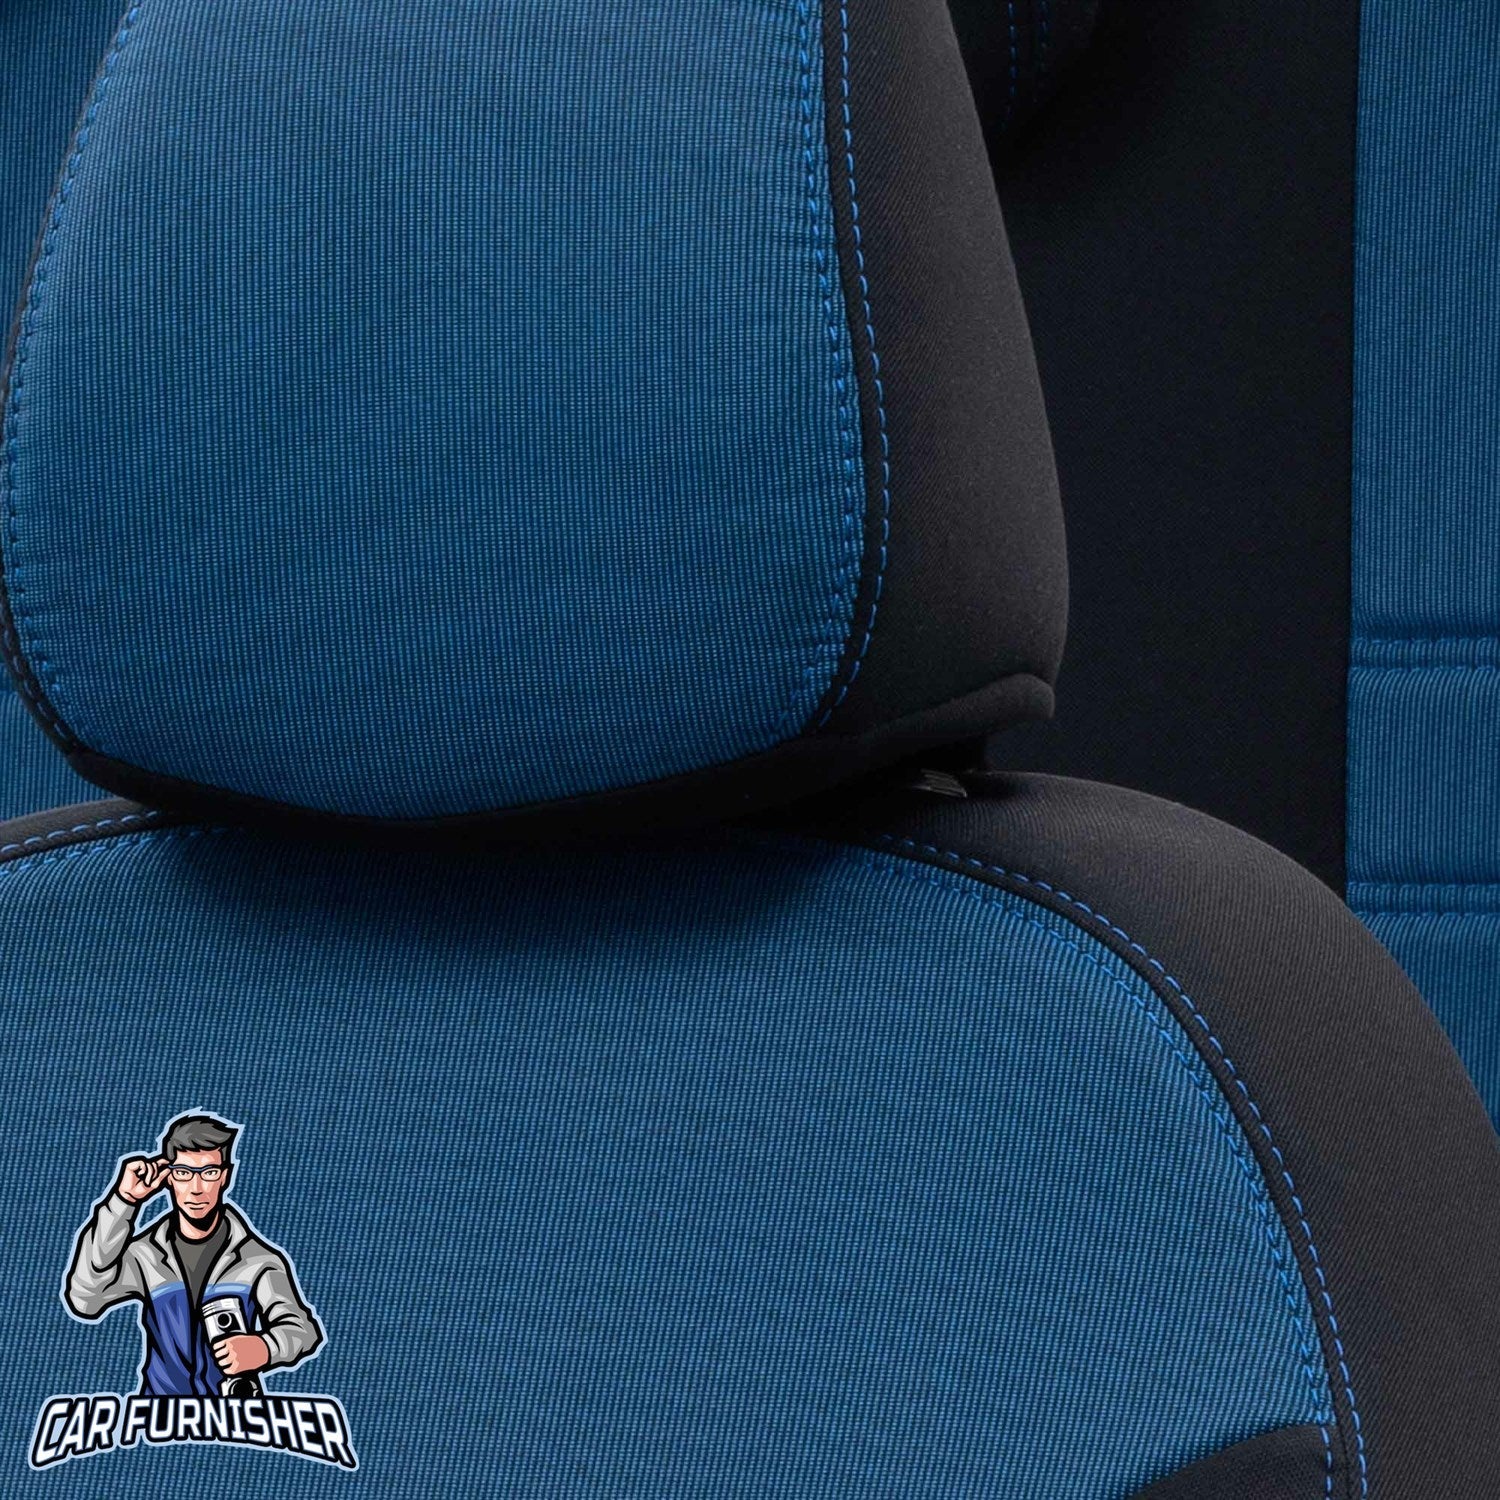 Toyota Proace City Seat Covers Original Jacquard Design Blue Jacquard Fabric